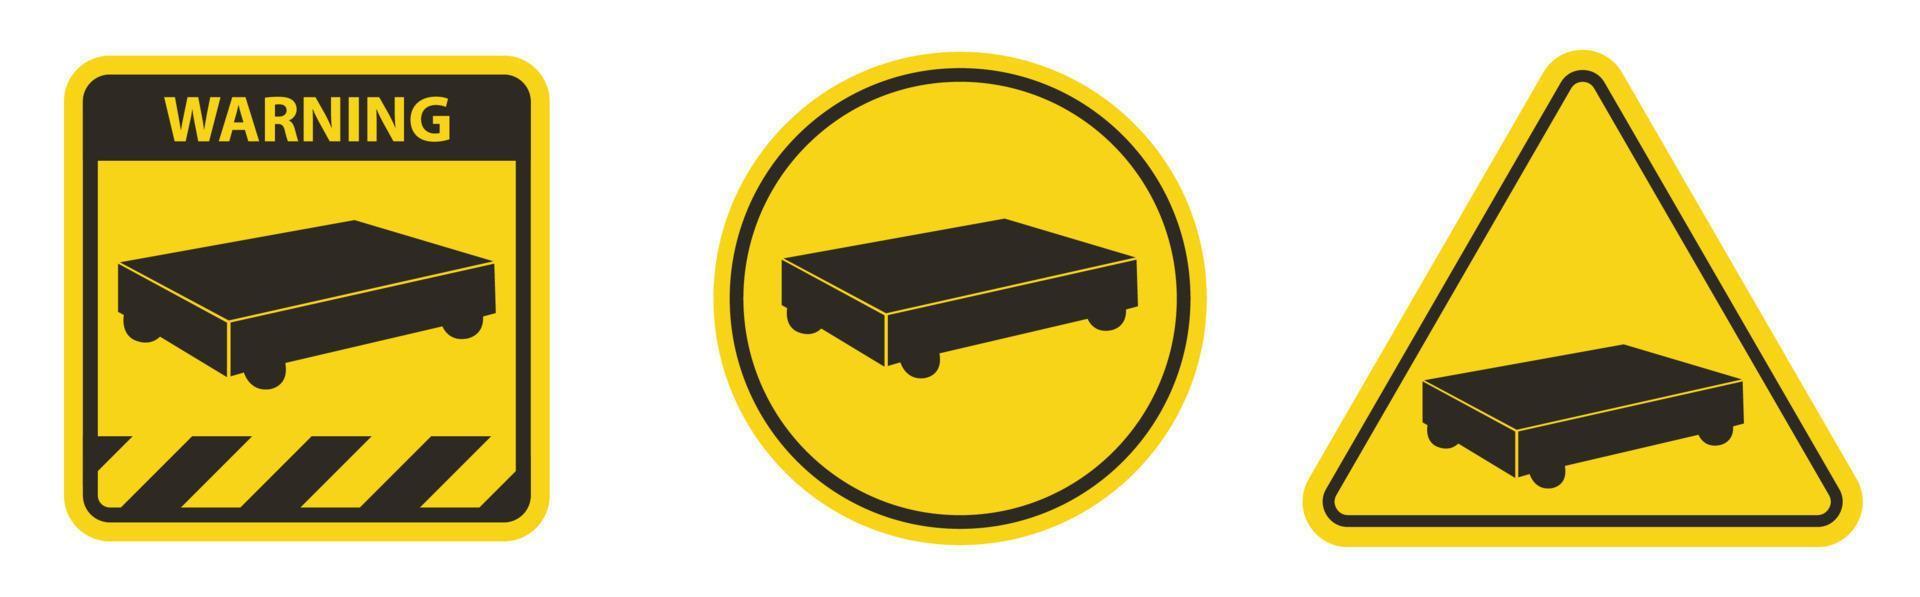 ppe icon.paint trolley parking symbol sign isolado no fundo branco, ilustração vetorial eps.10 vetor